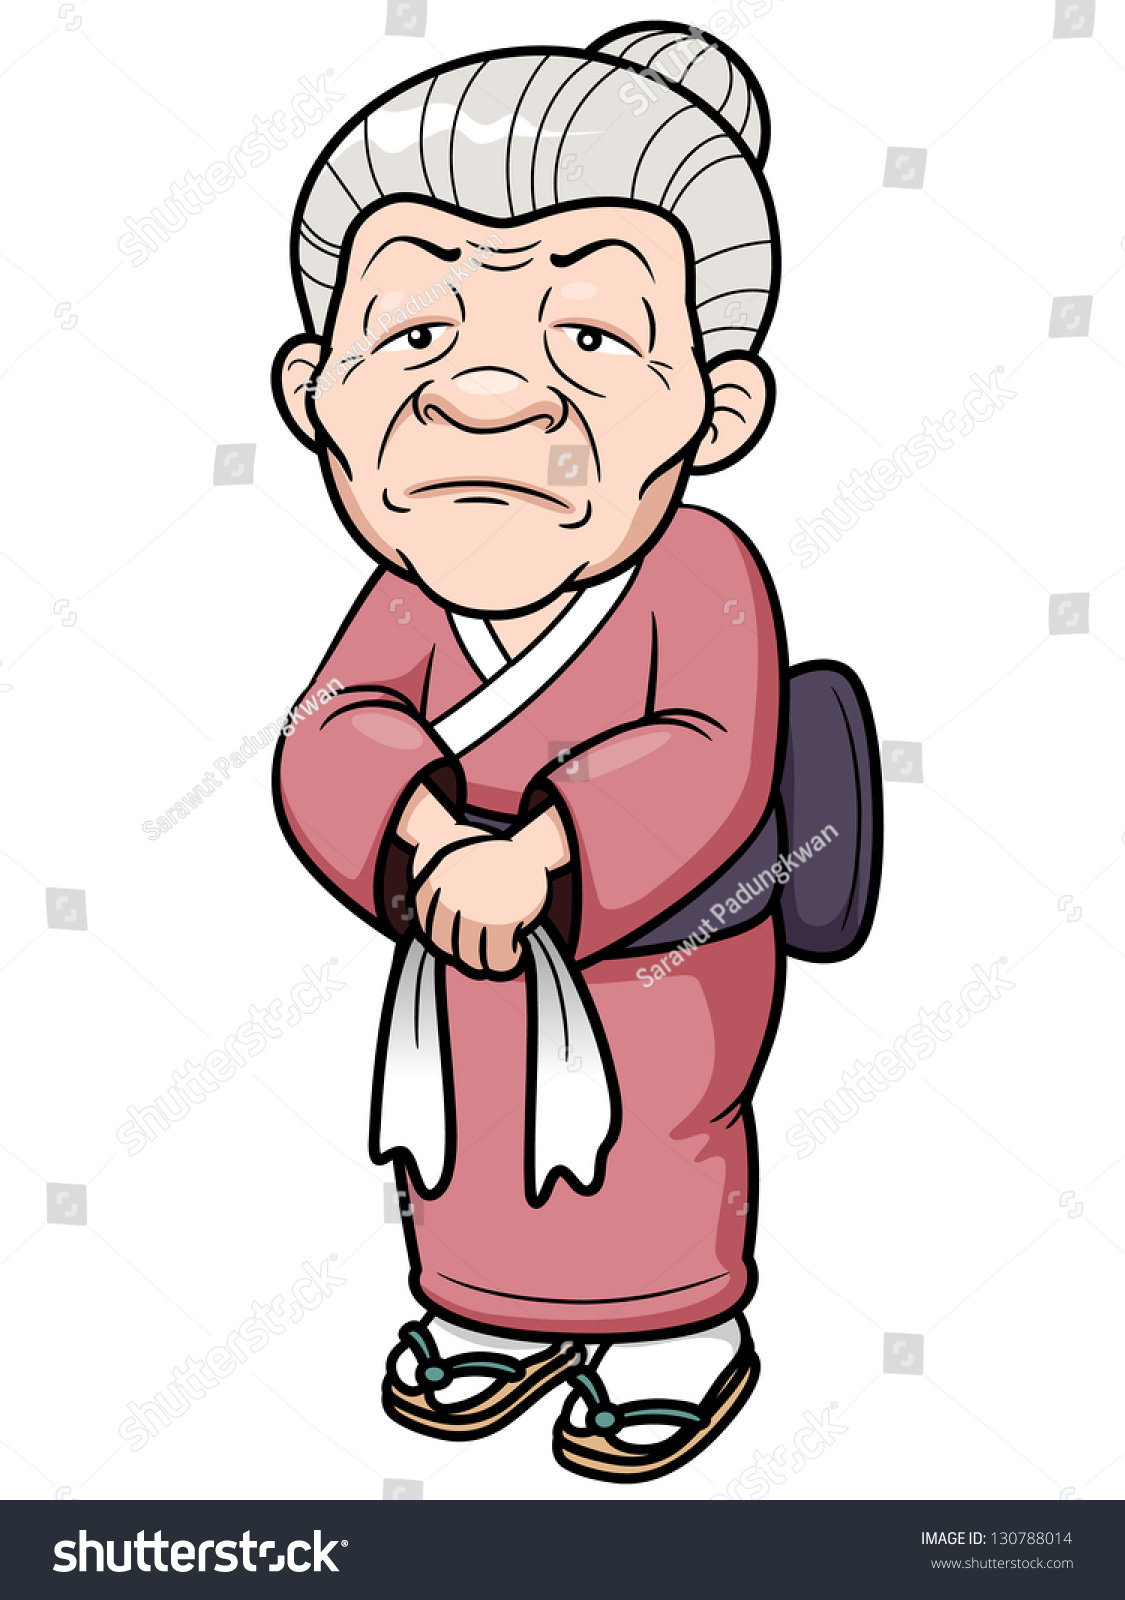 Vector Illustration Of The Old Woman Cartoon - 130788014 : Shutterstock